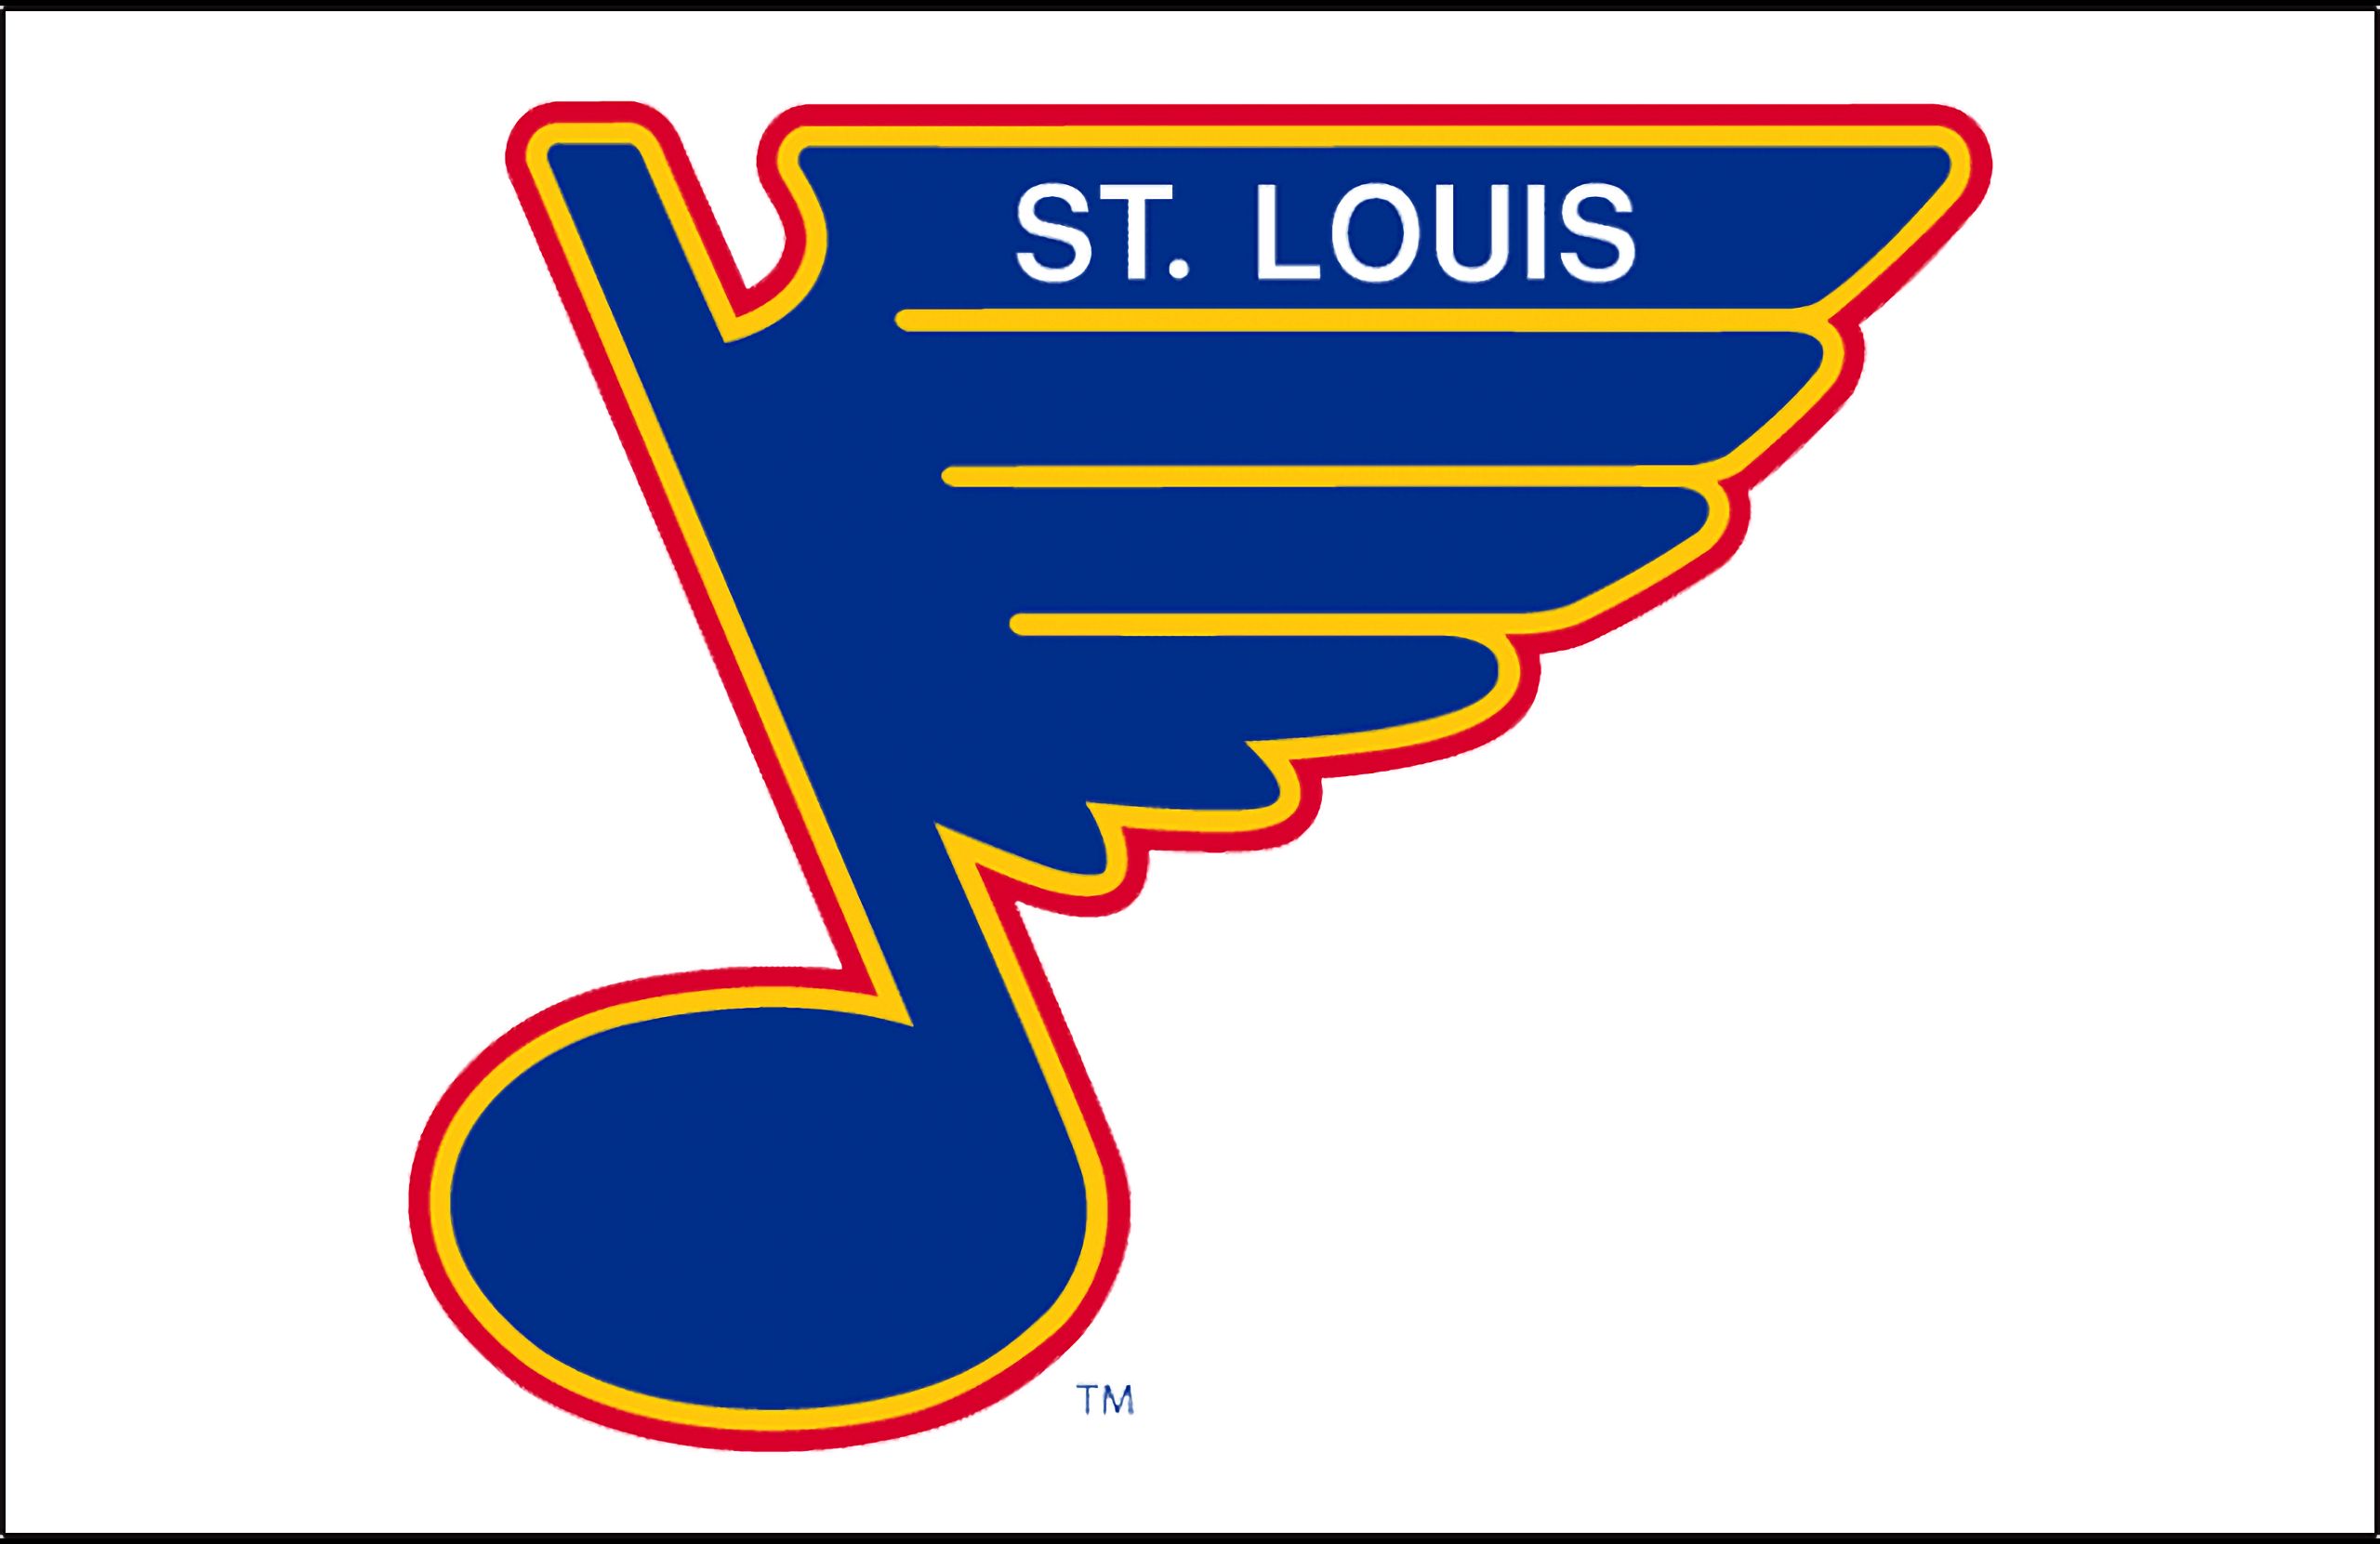 St. Louis Blues - Hockey & Sports Background Wallpapers on Desktop Nexus  (Image 2488715)